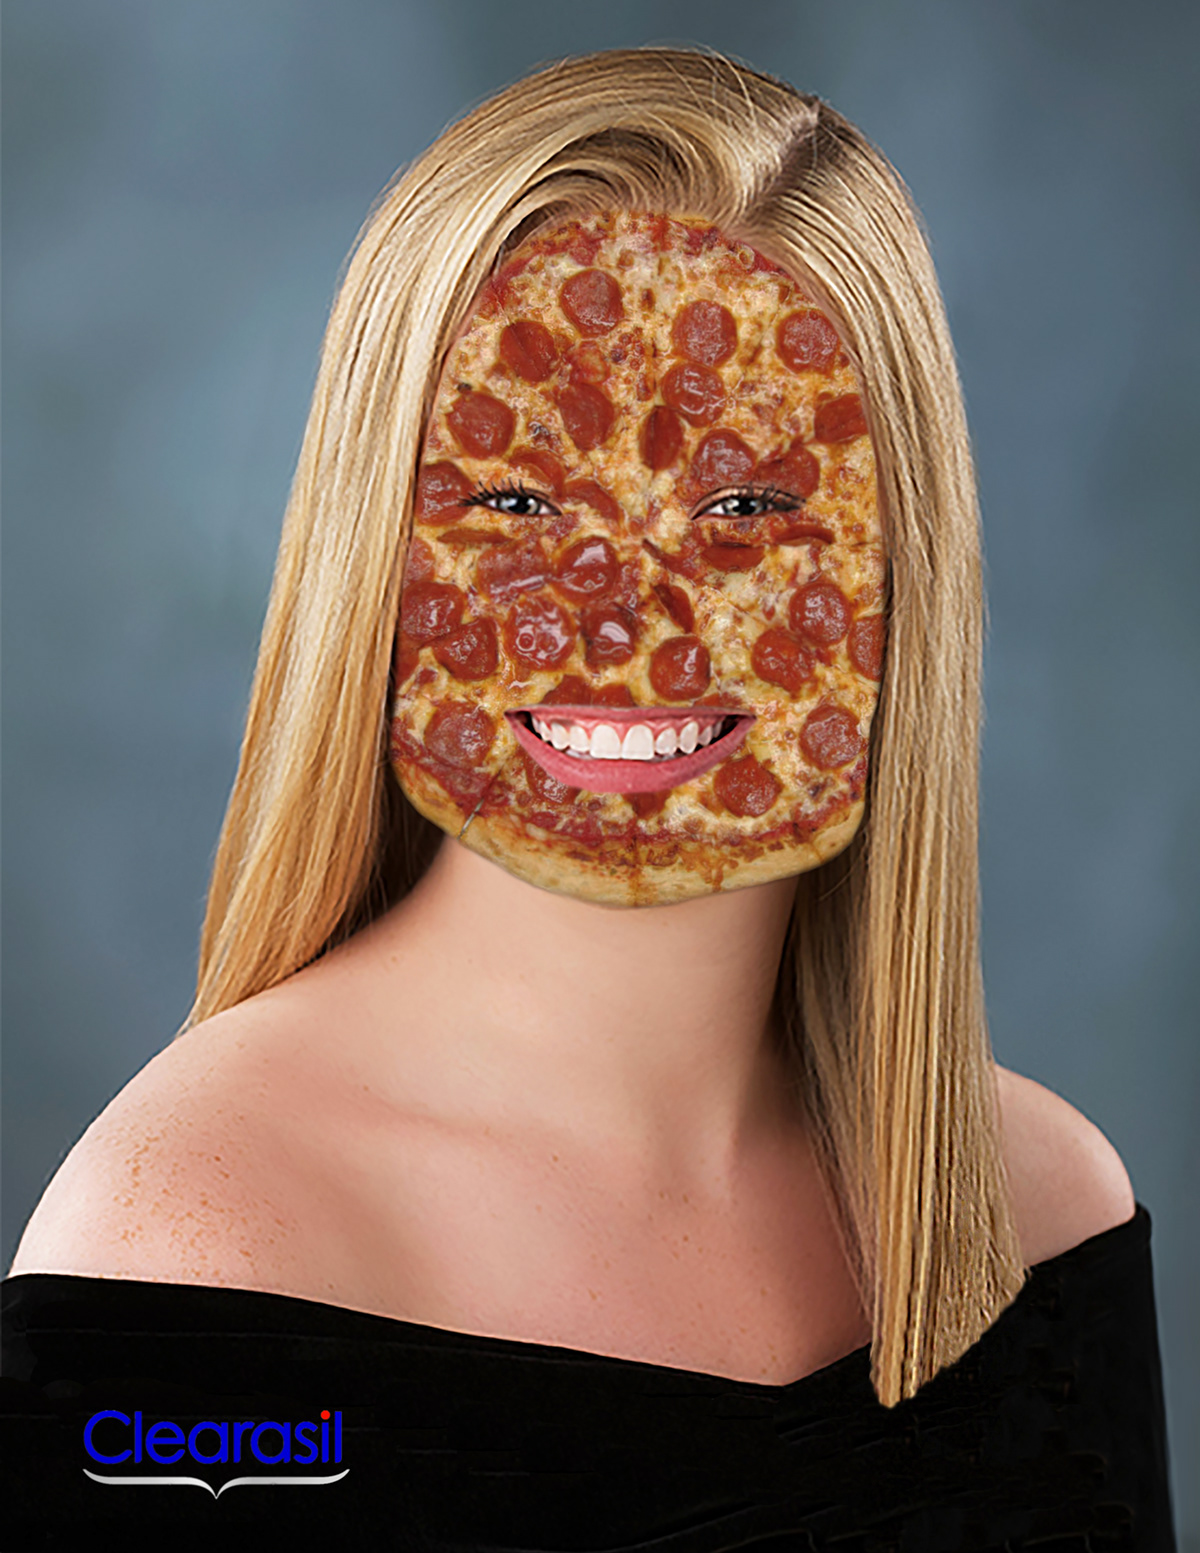 clearasil Pizza Face acne